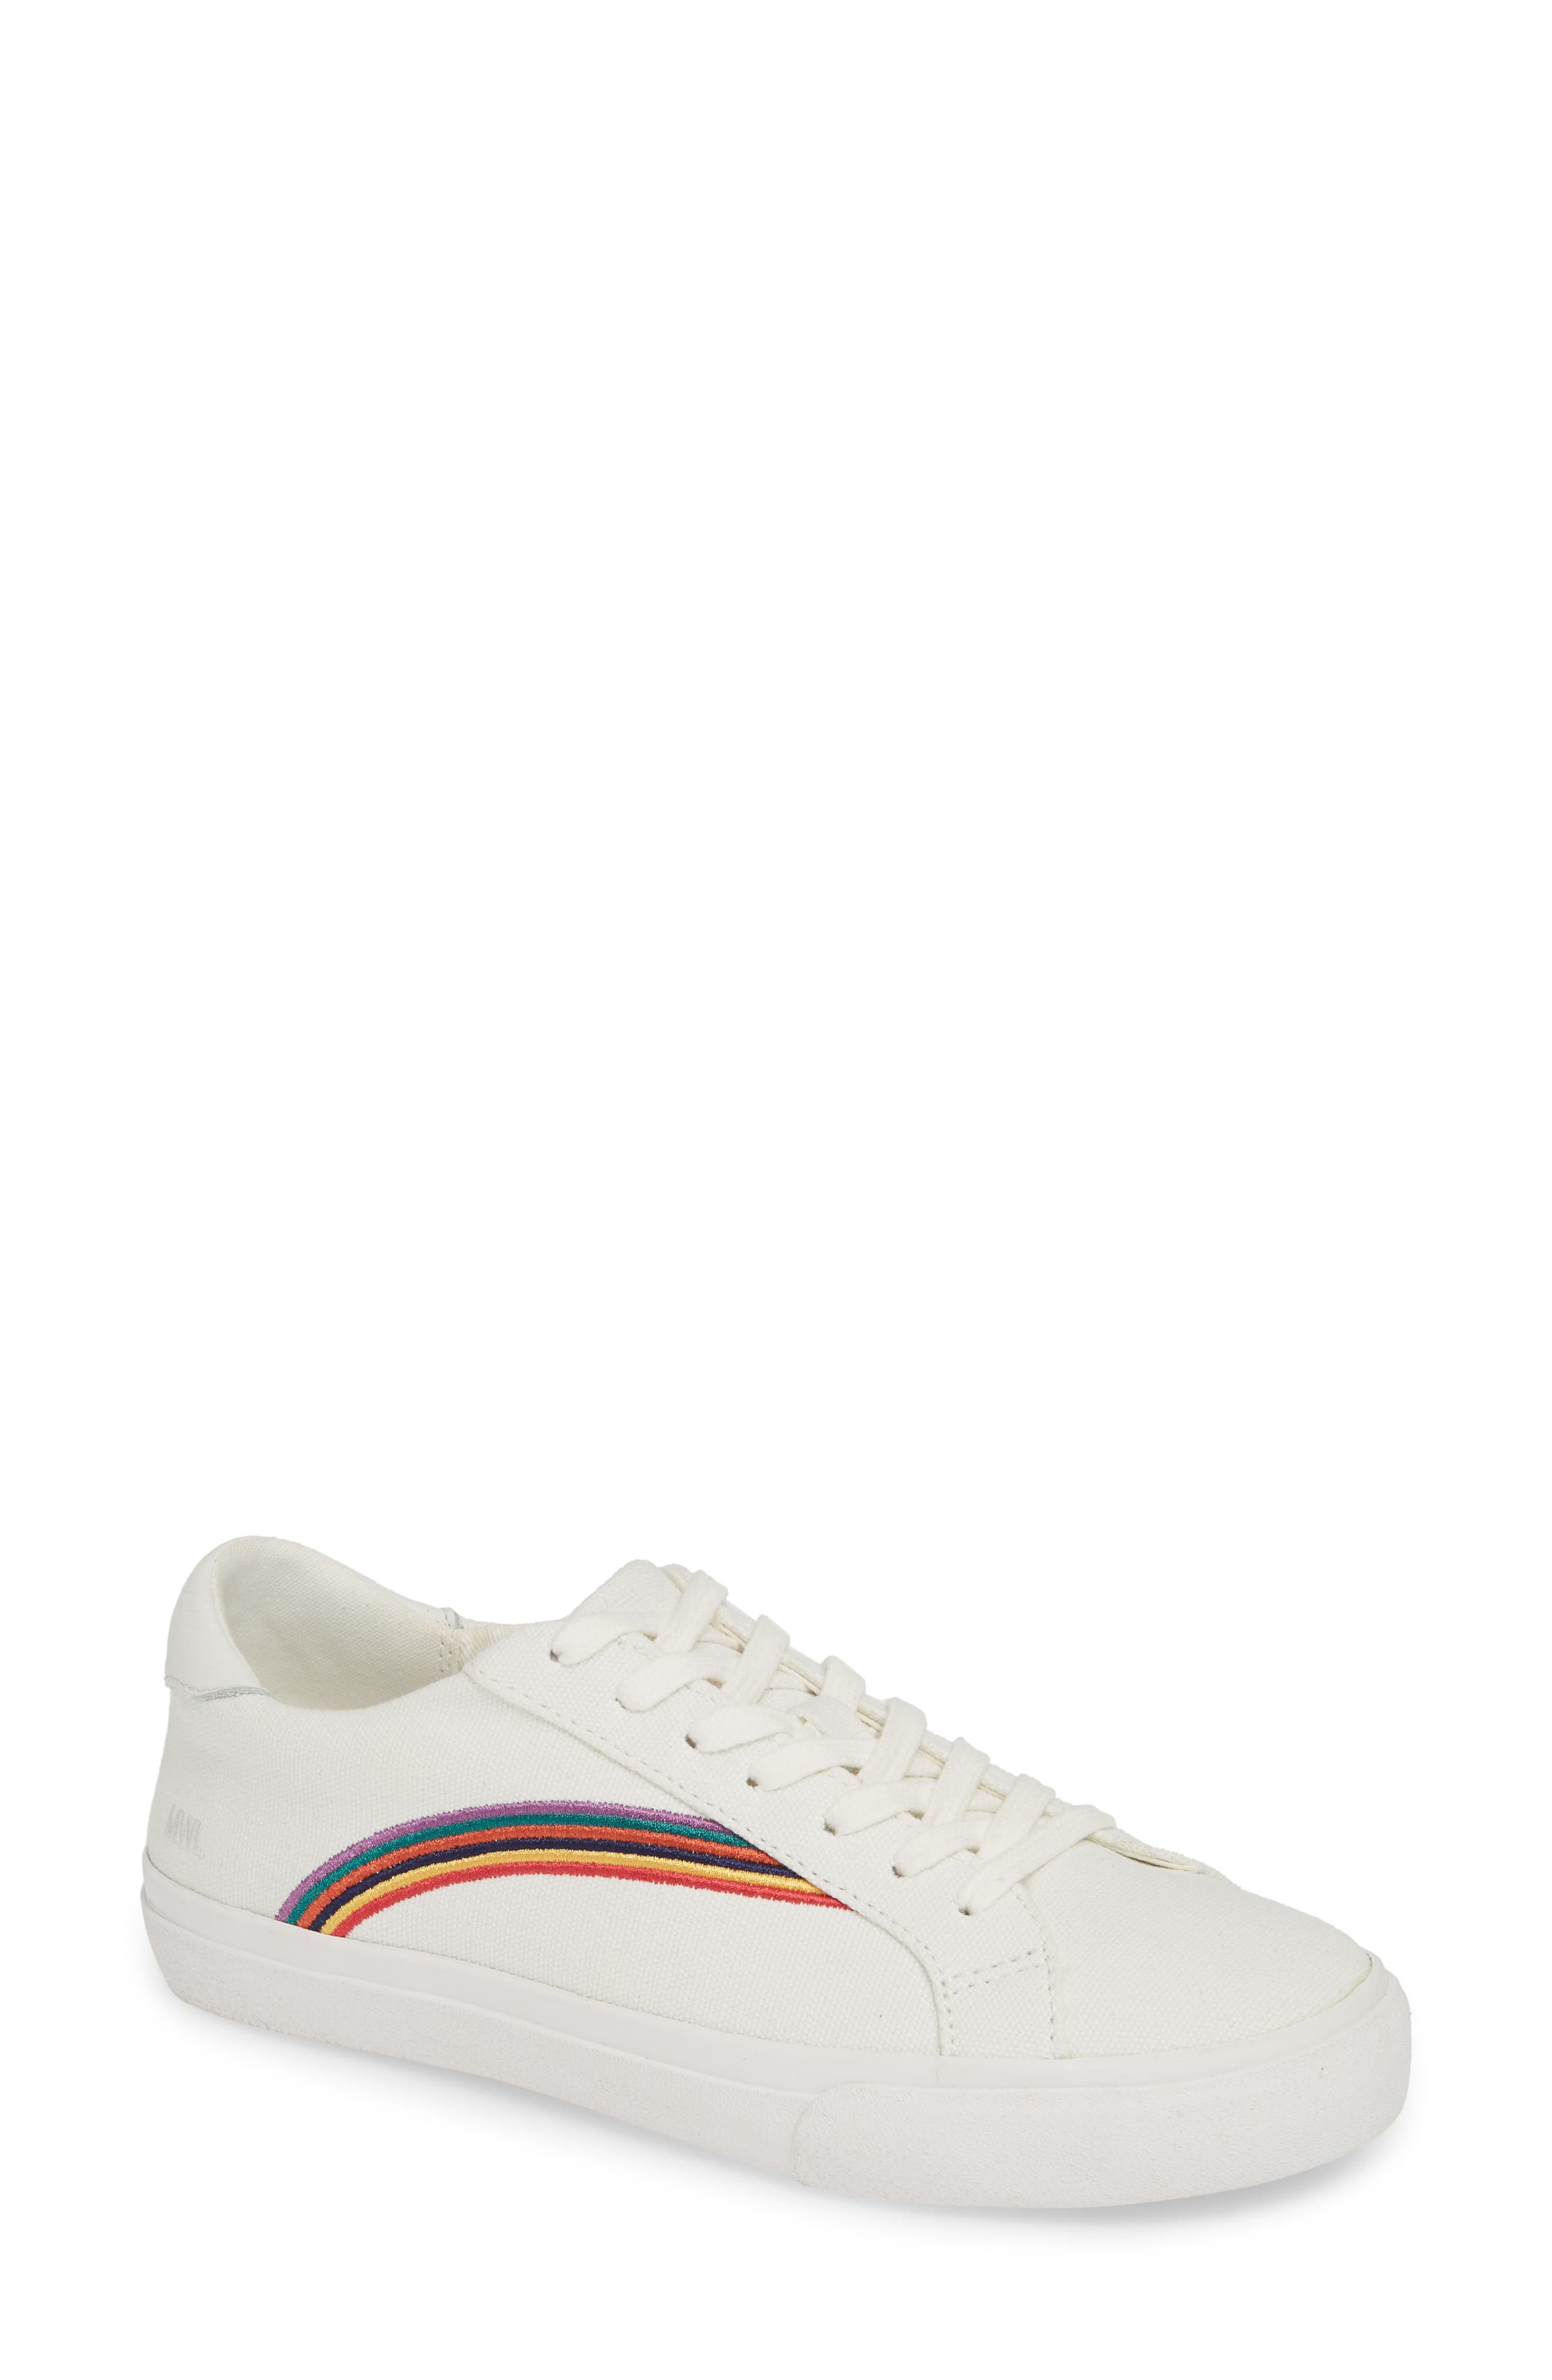 madewell rainbow sneakers